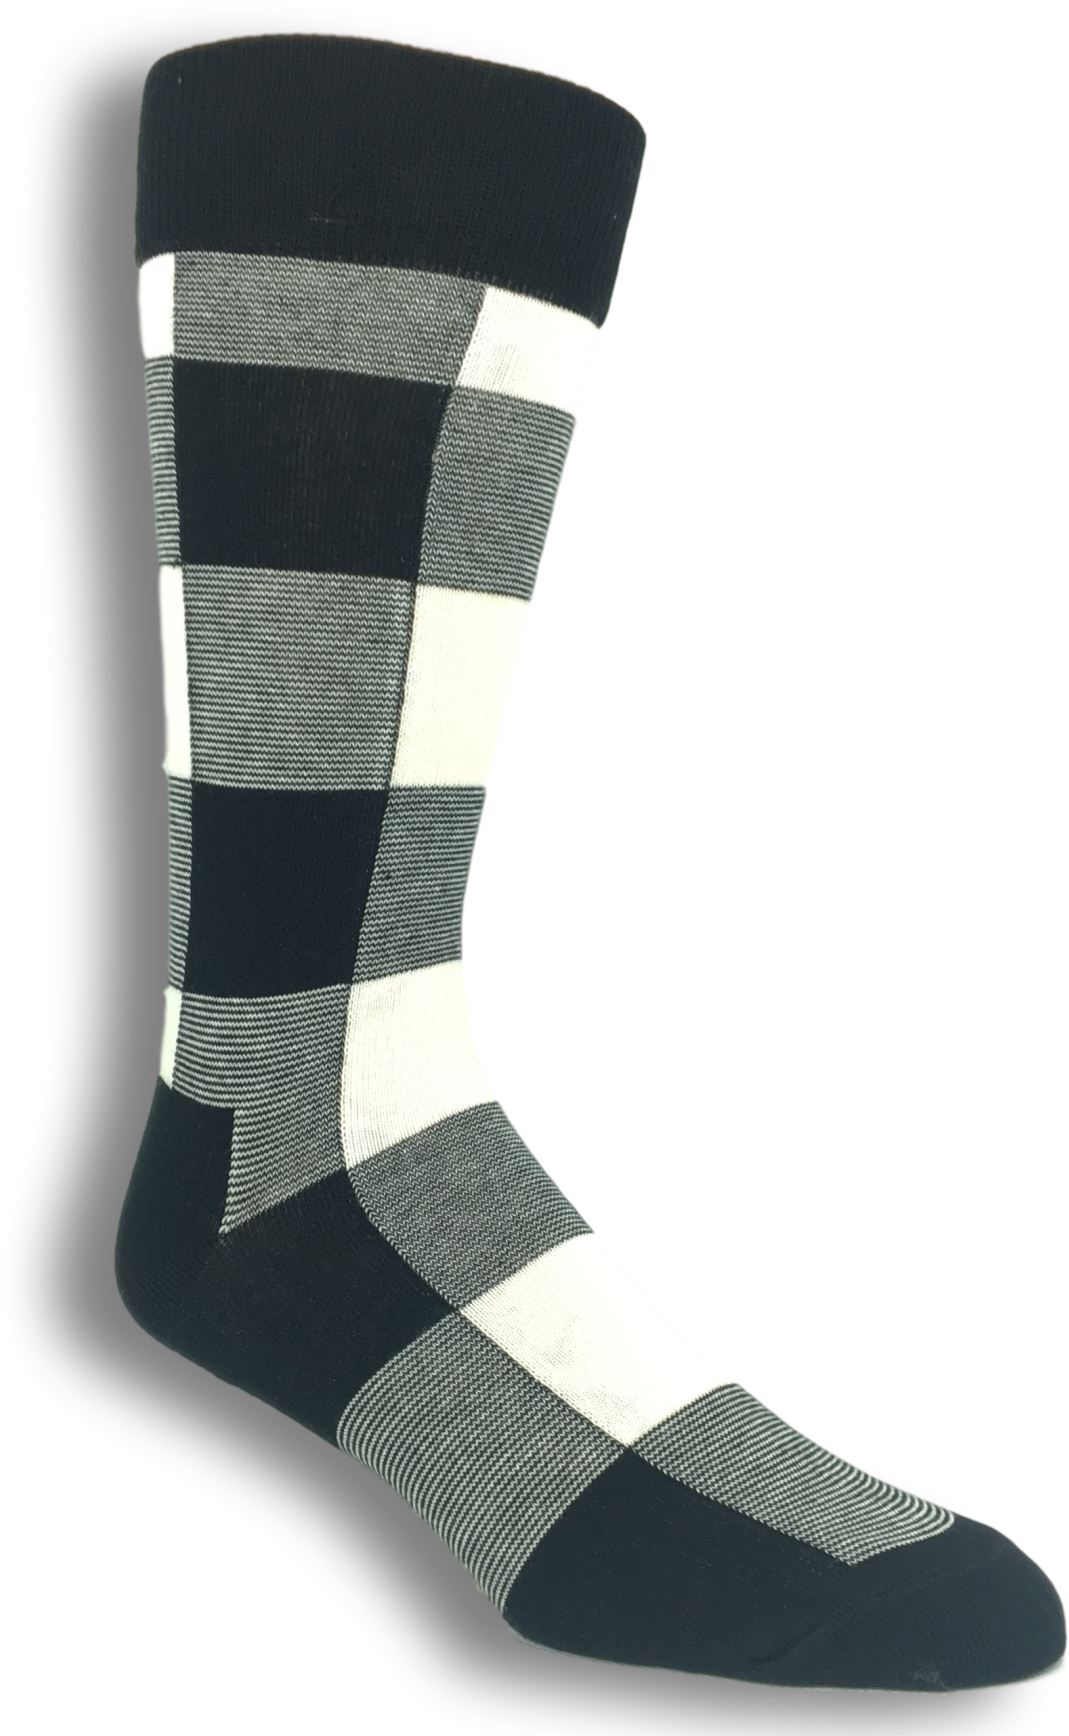 Black And White Lumberjack Socks By Happy Socks - Sock (1736x1736), Png Download